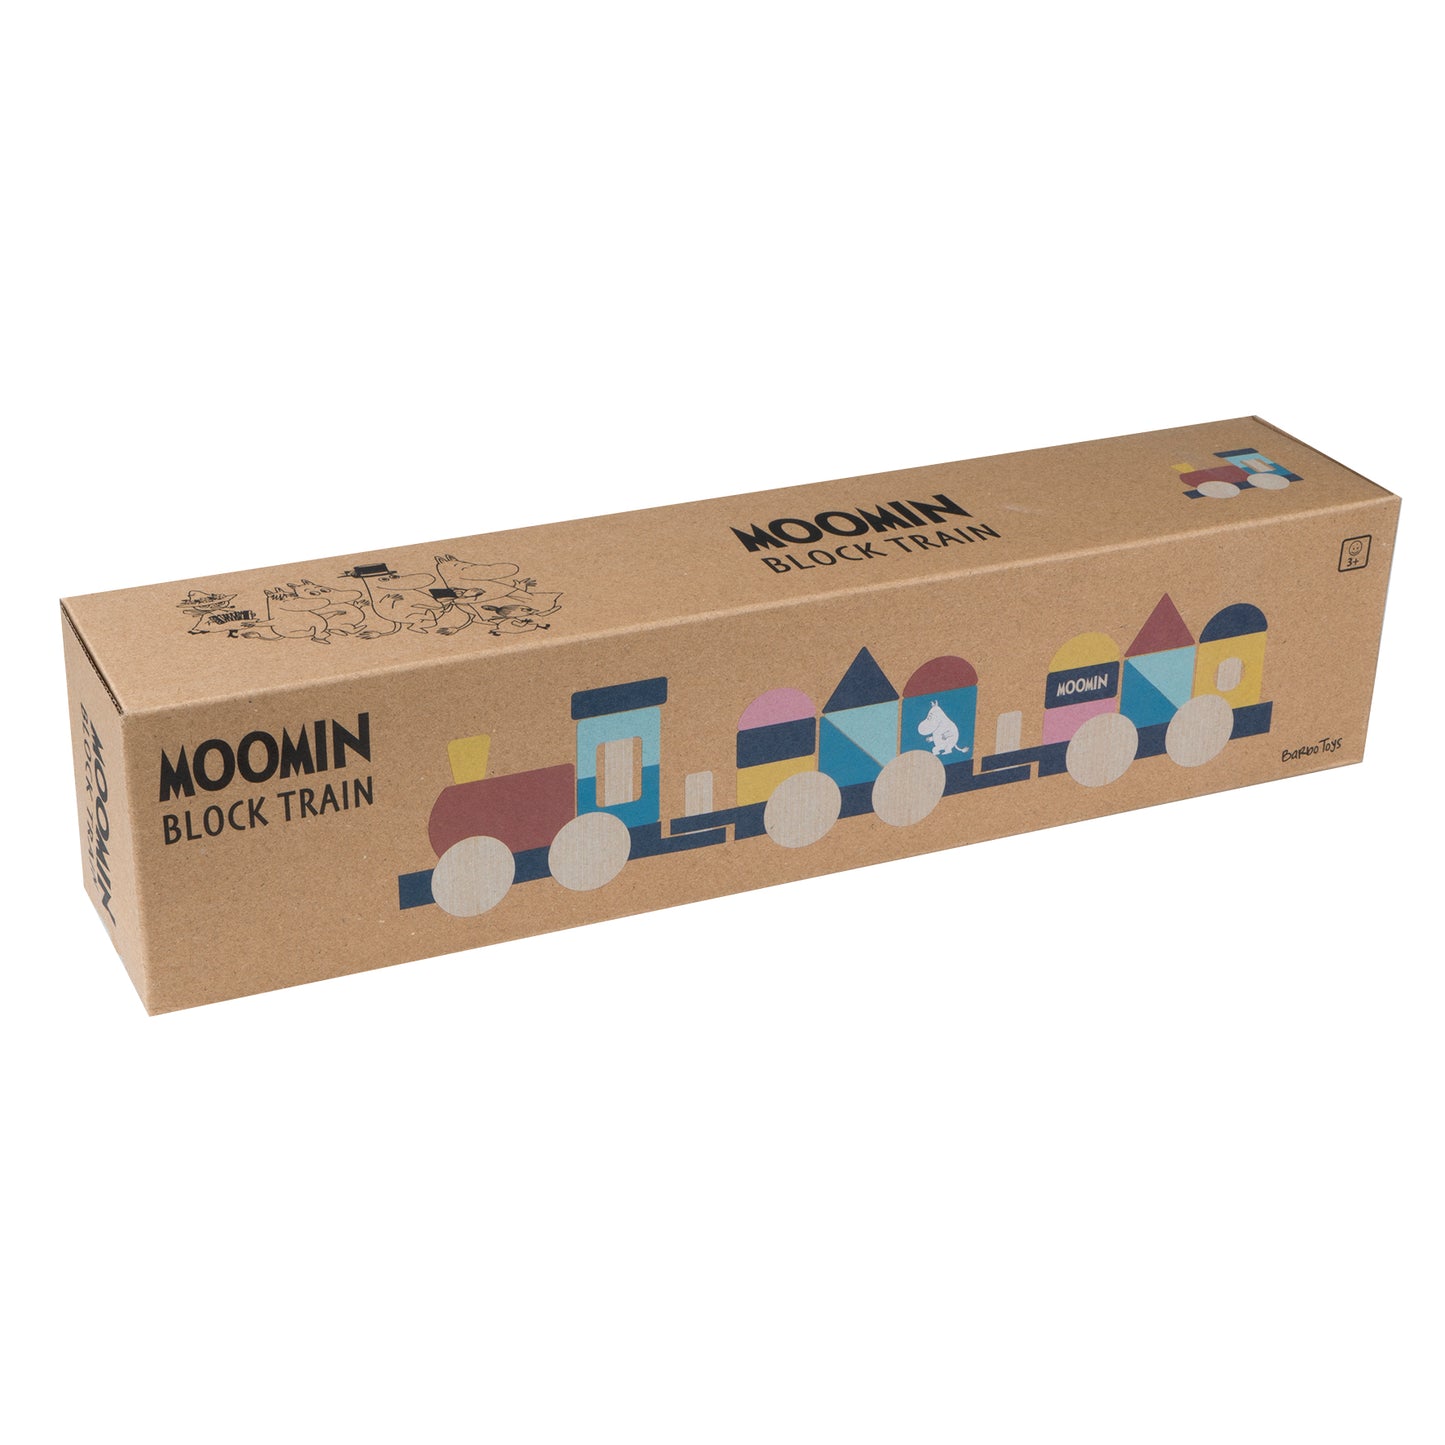 Moomin Wooden Train